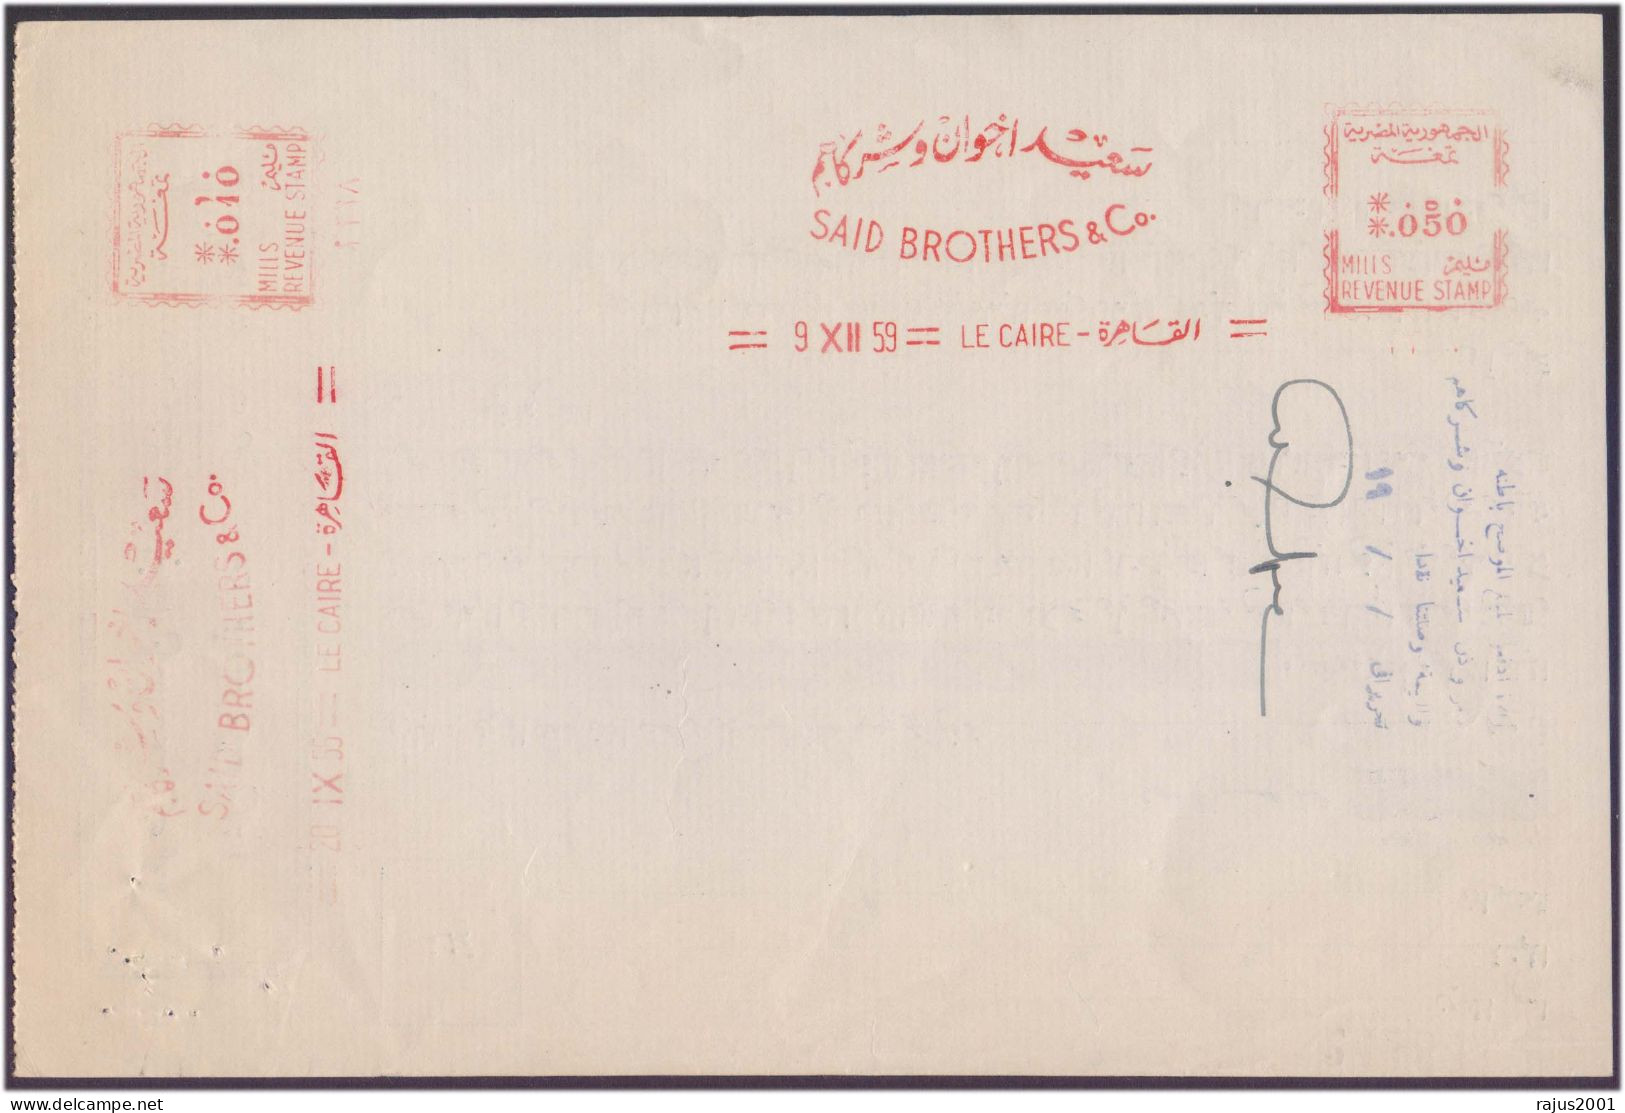 Said Brothers & Co. EMA Red Meter Frank Revenue Stamp, Saad Al Din Al Sanbari Bond Paper Egypt Postal Stationary 1959 - Covers & Documents